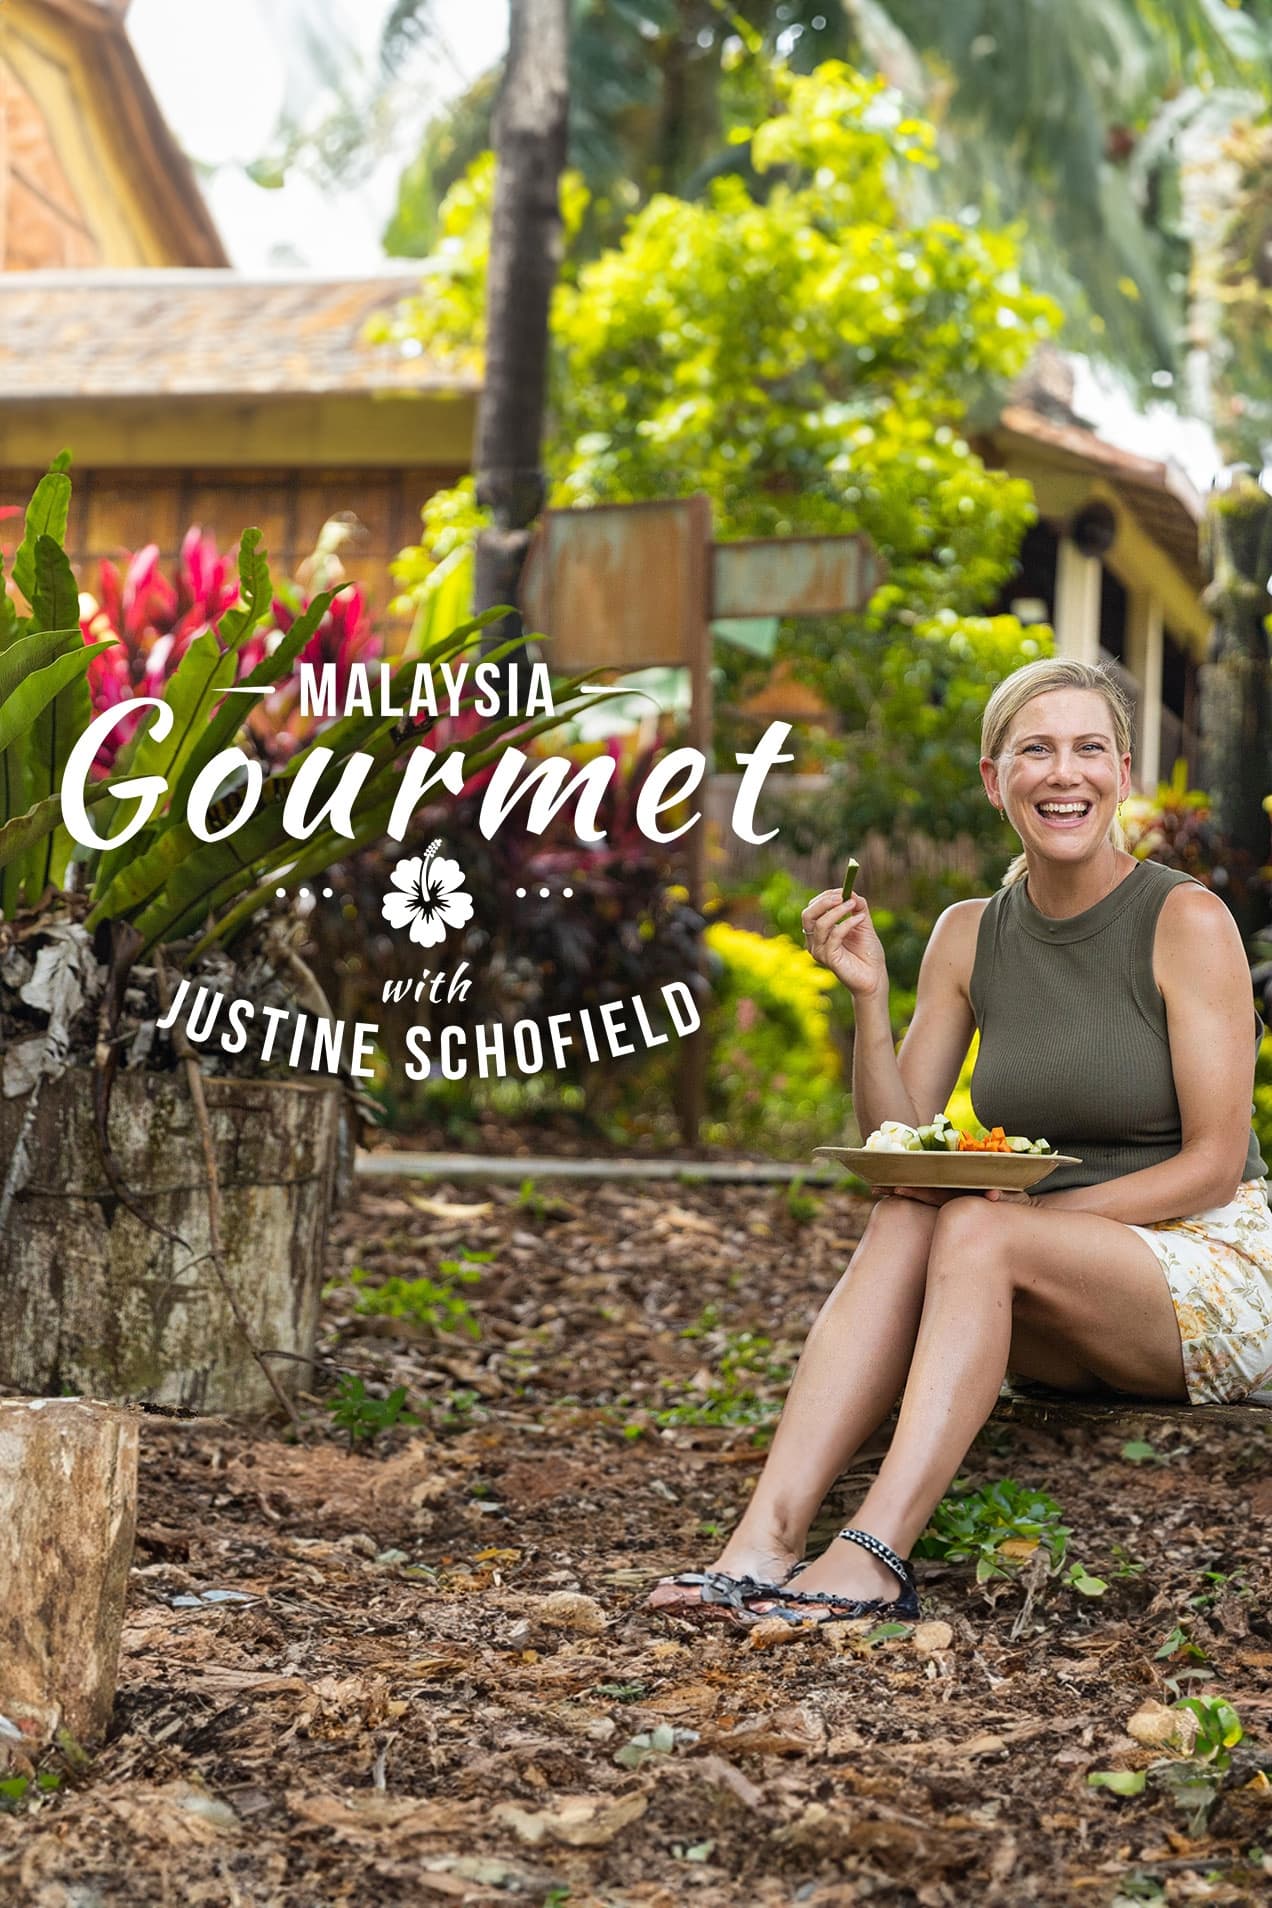 Malaysia Gourmet with Justine Schofield